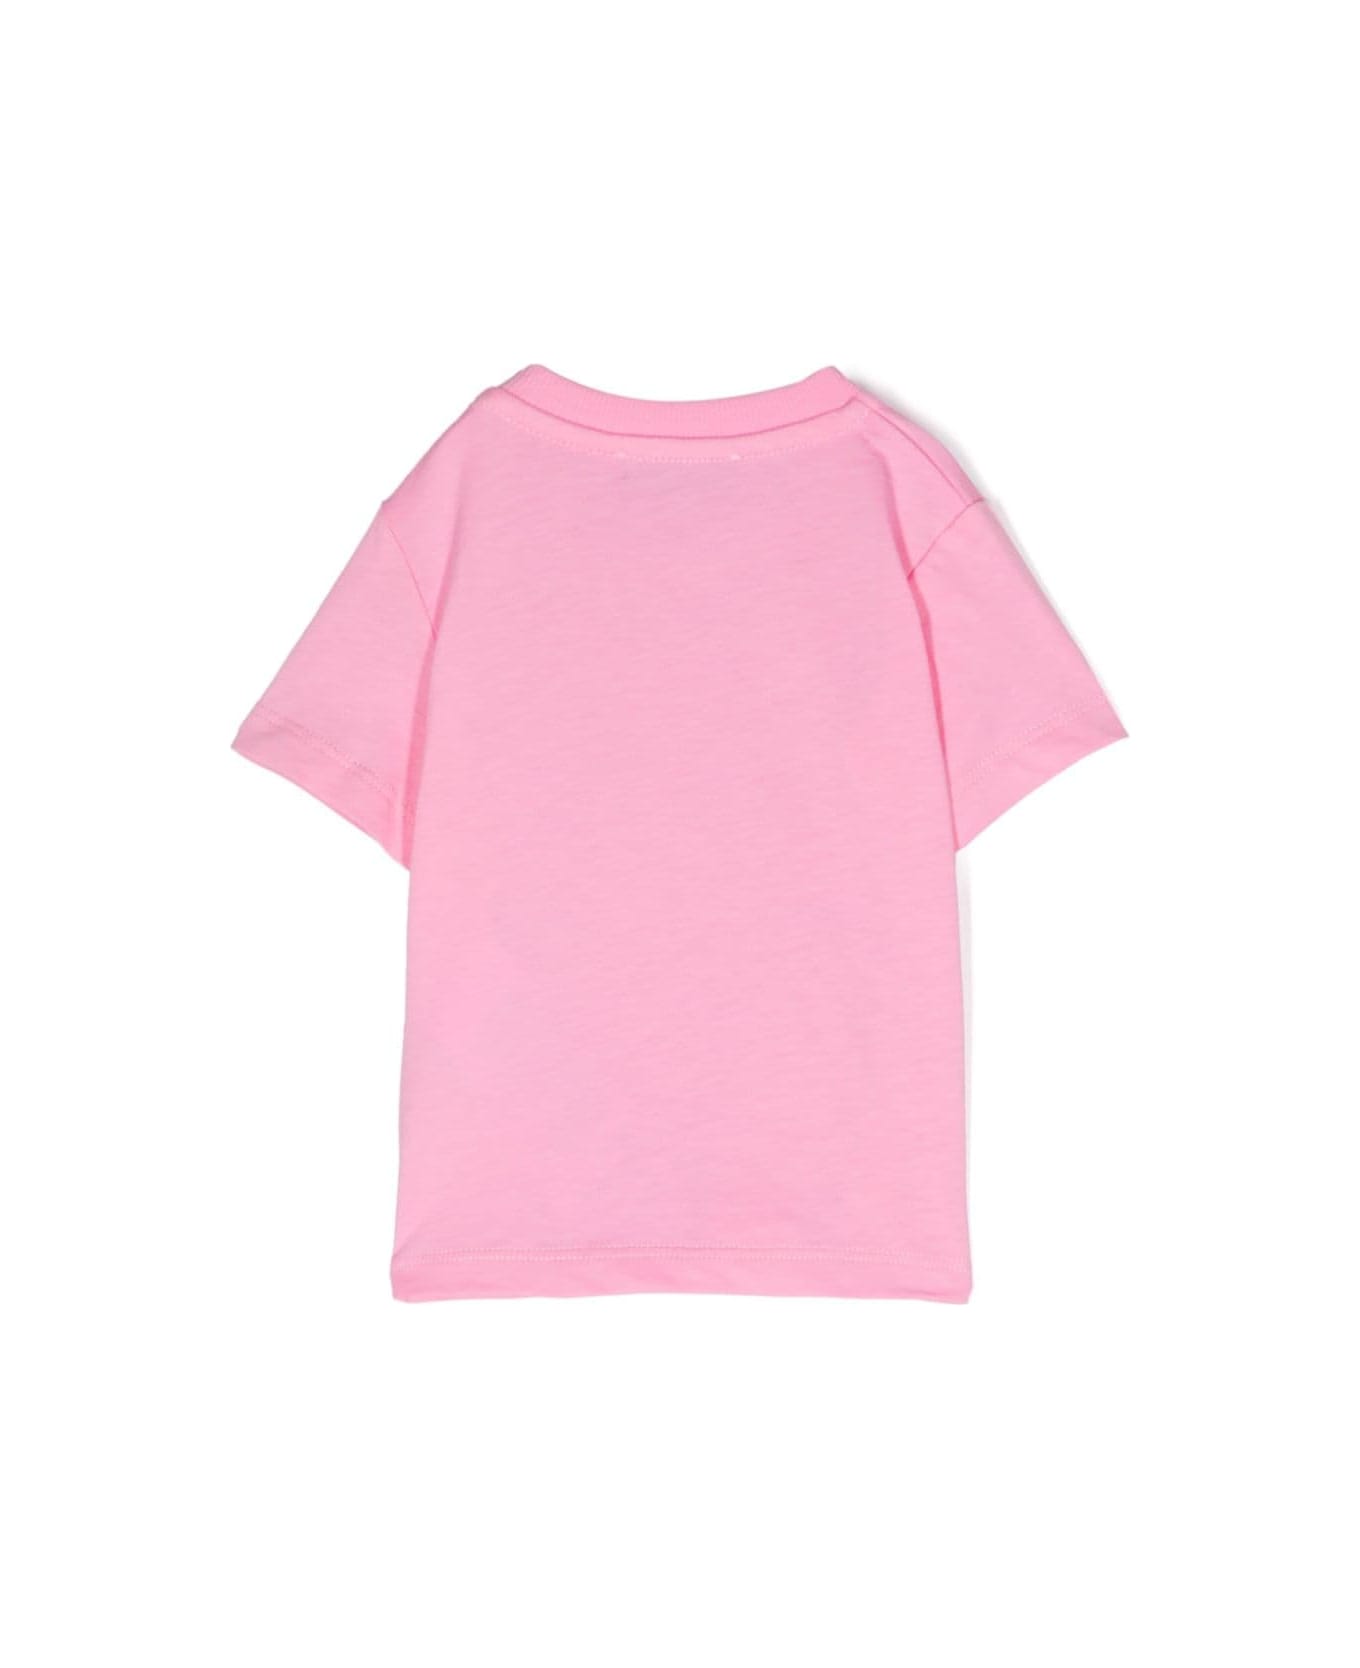 Moschino T-shirt Con Logo - Pink